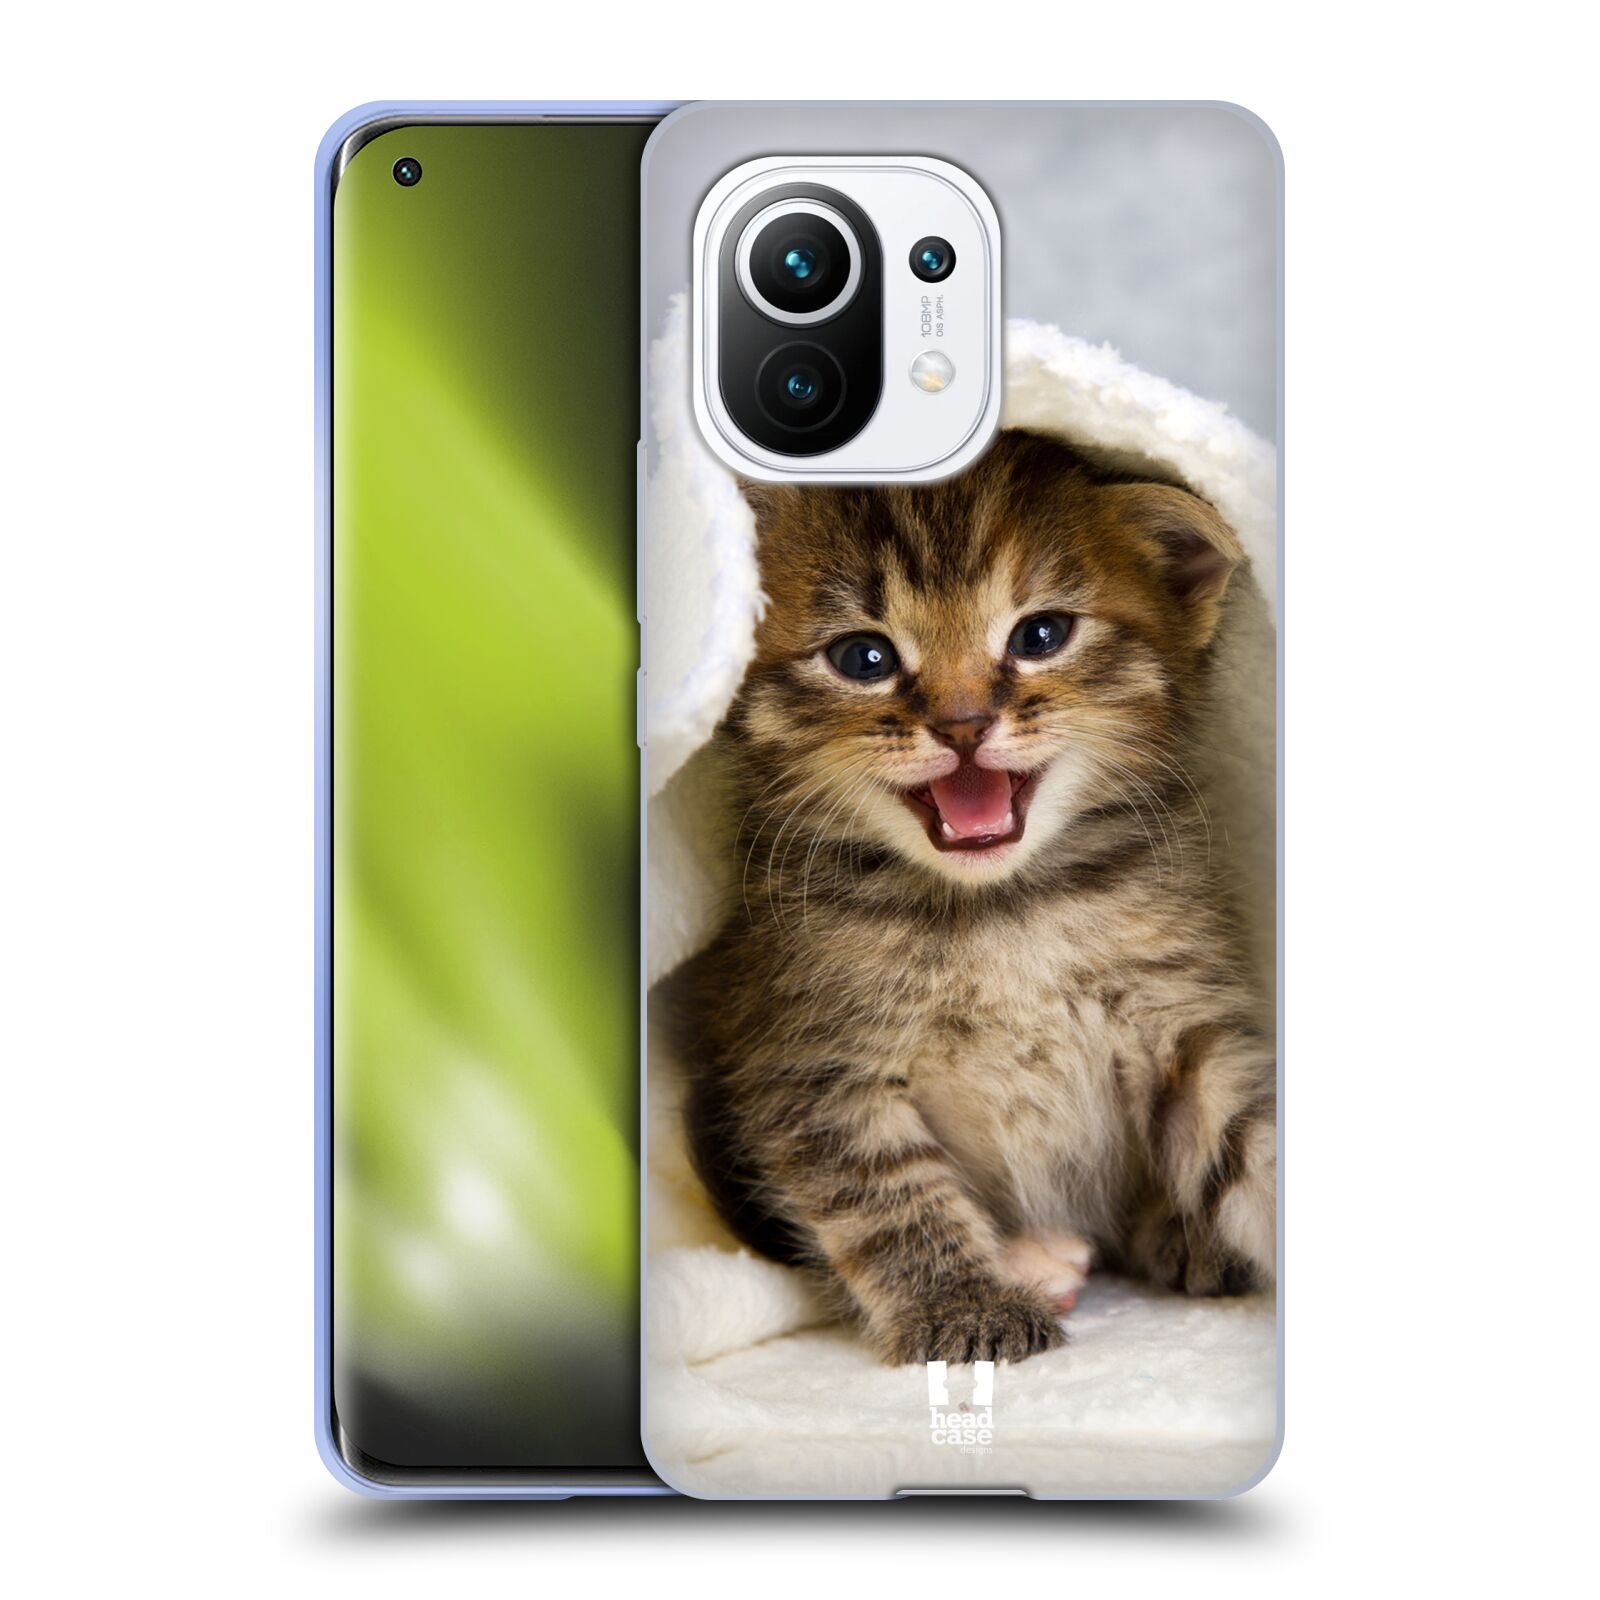 Plastový obal HEAD CASE na mobil Xiaomi Mi 11 vzor Kočičky koťata foto kotě v ručníku